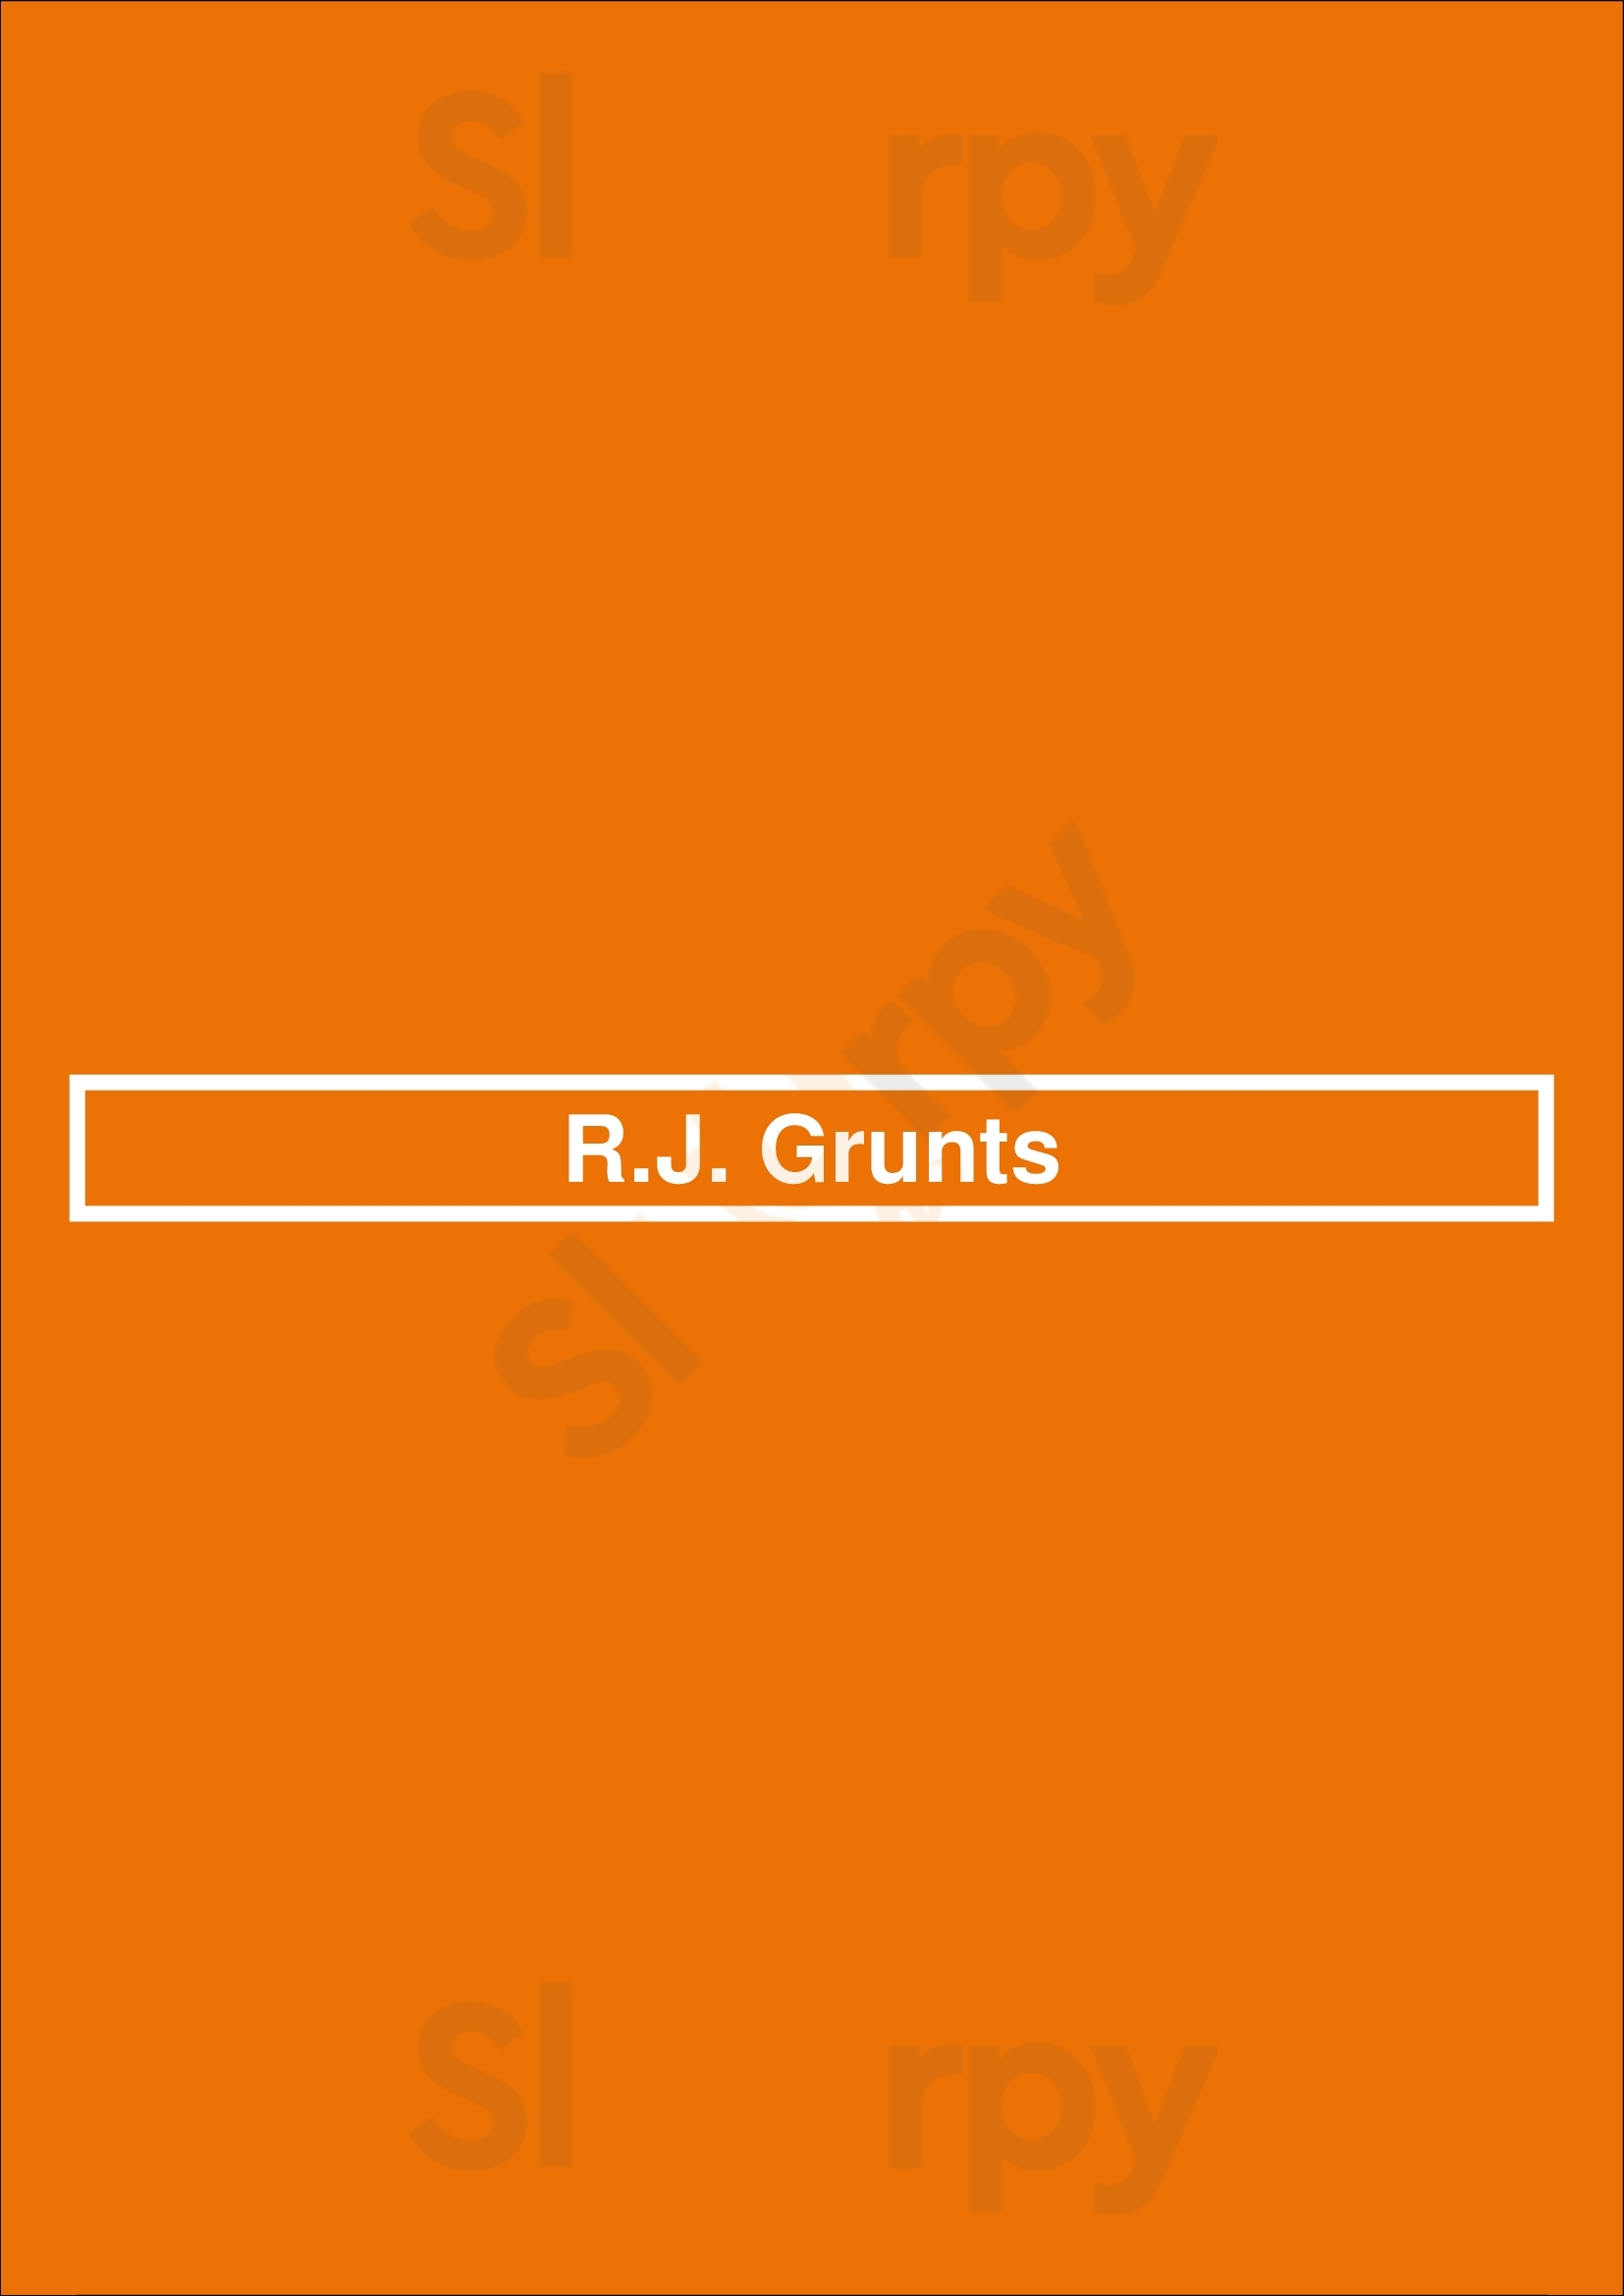 R.j. Grunts Chicago Menu - 1